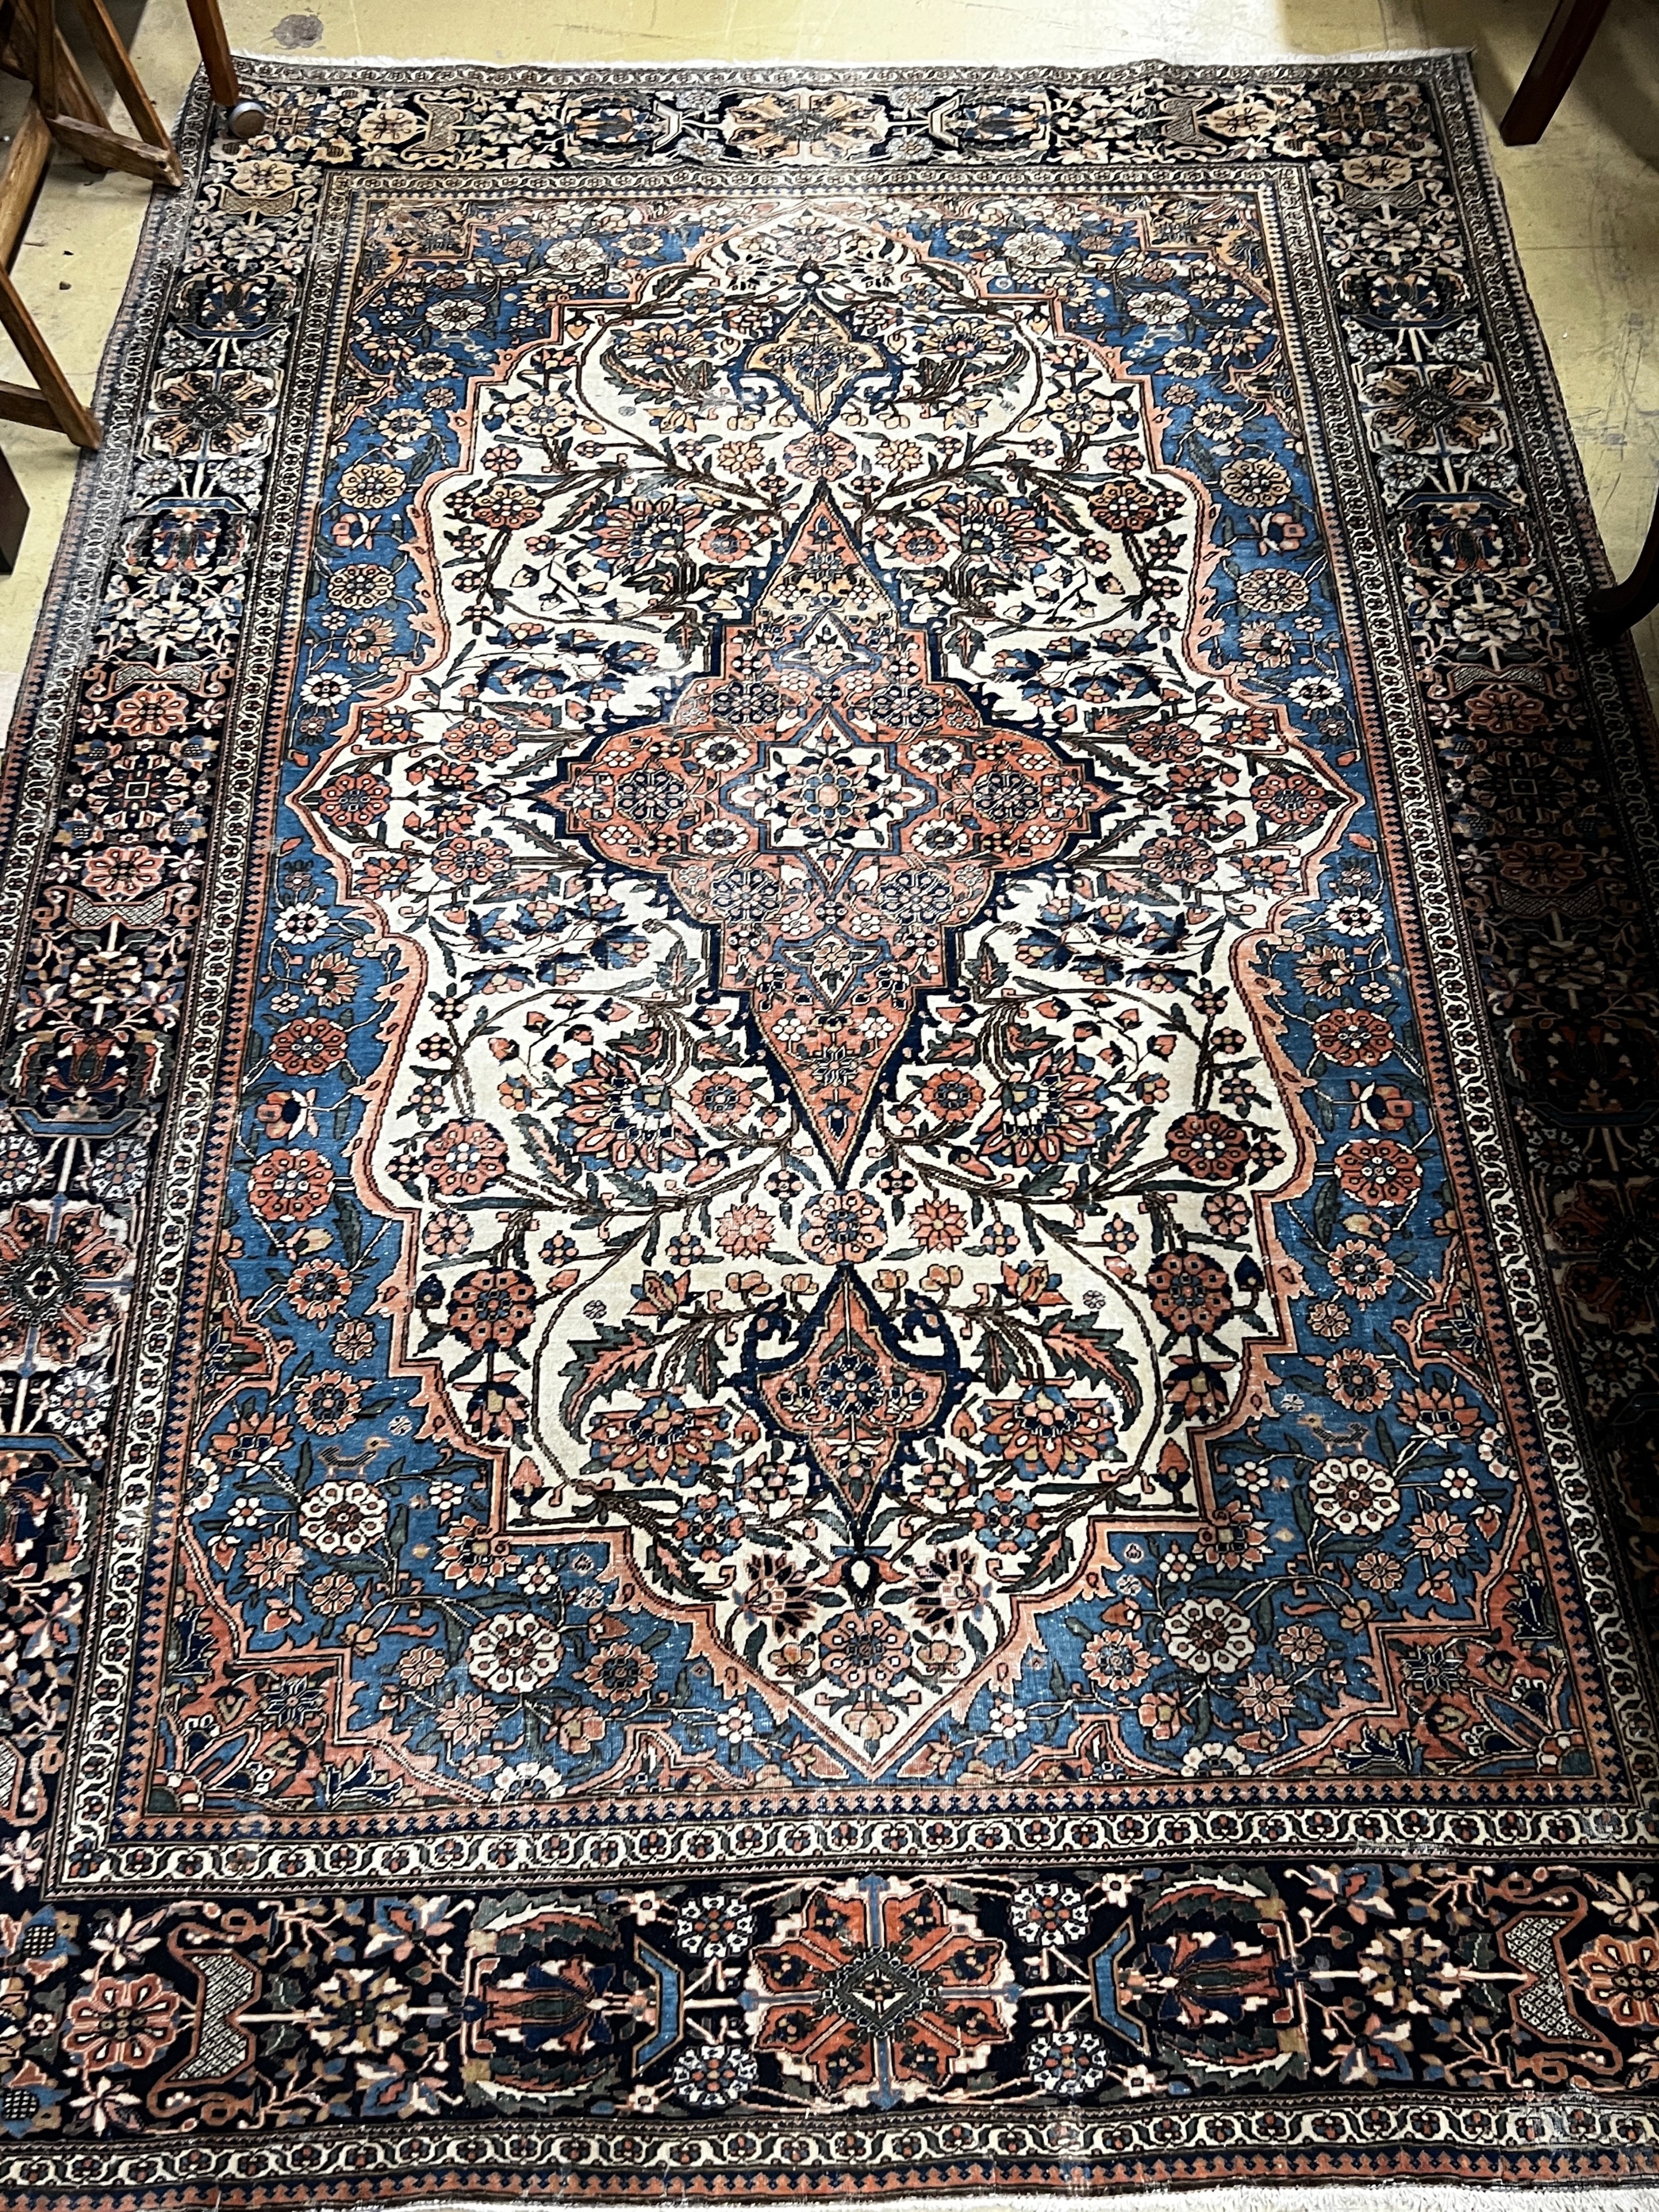 An antique Kashan blue ground rug, 207 x 140cm